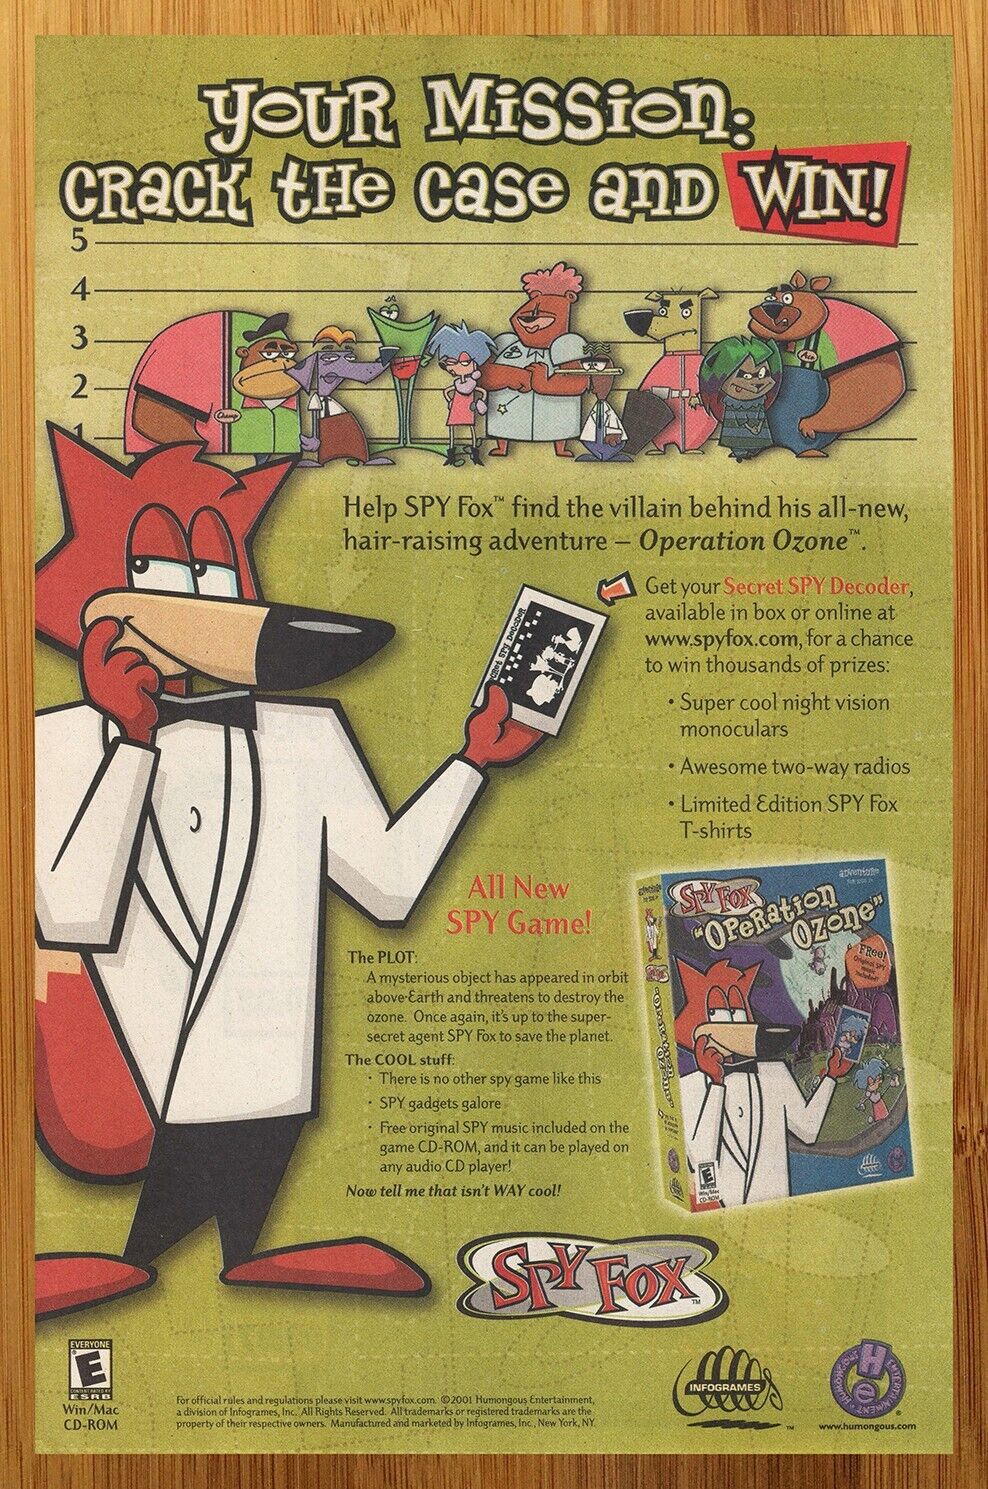 2001 Spy Fox Operation Ozone PC Print Ad/Poster Retro CD-ROM Game Promo Art 00s